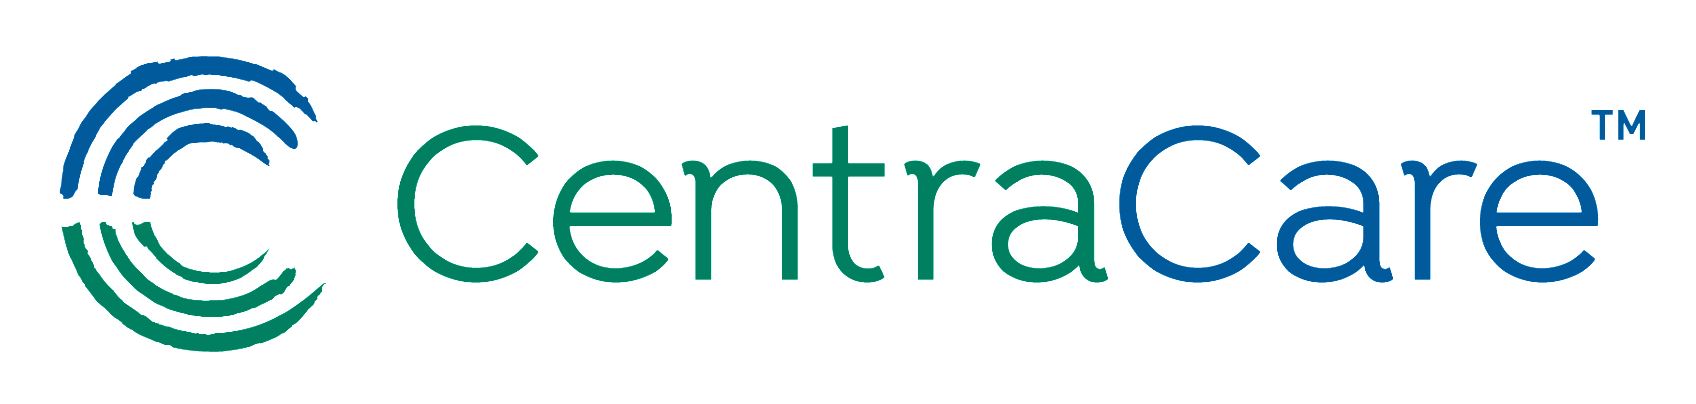 CentraCare - Family Medicine Clinics